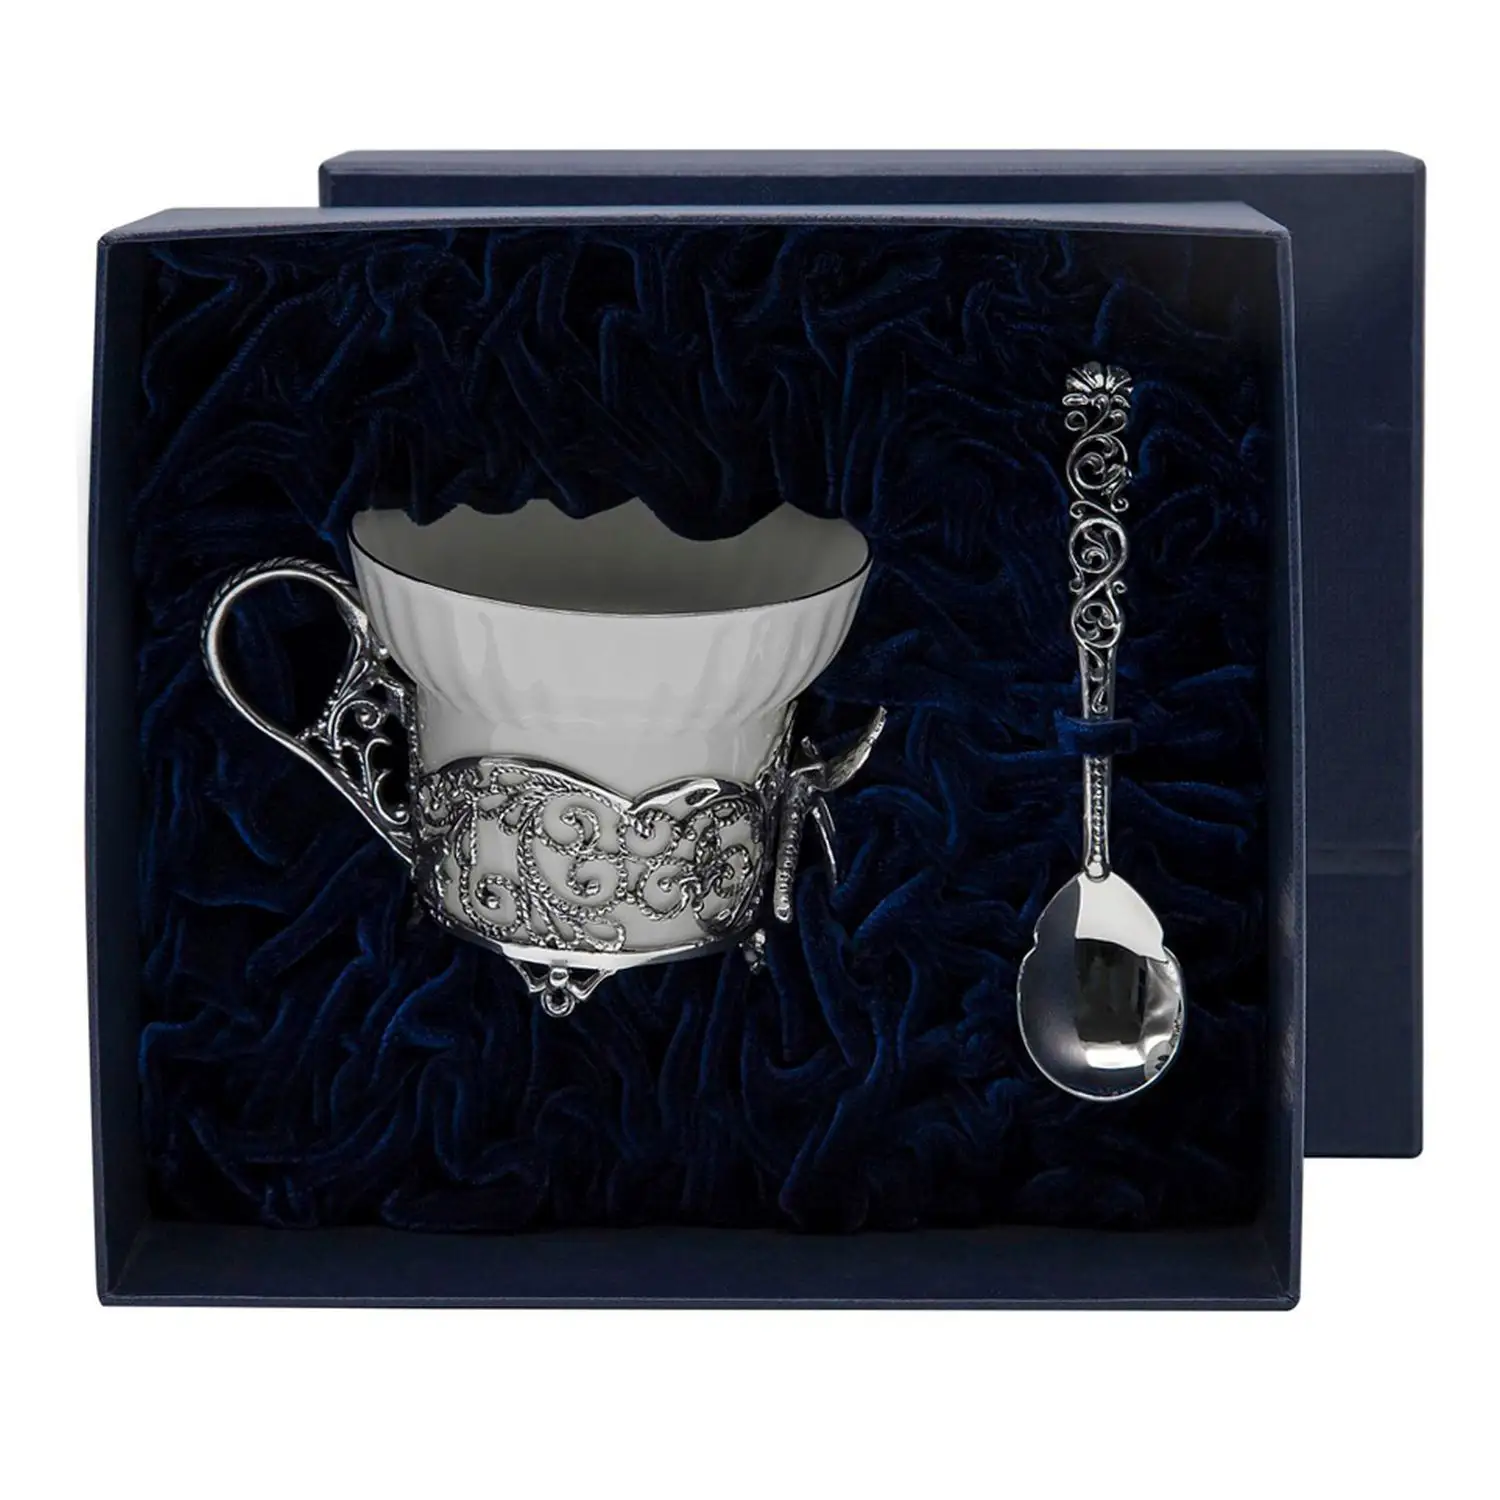 Набор чайная чашка Стрекоза : ложка, чашка (Серебро 925) чашка чайная стрекоза с чернением серебро 925